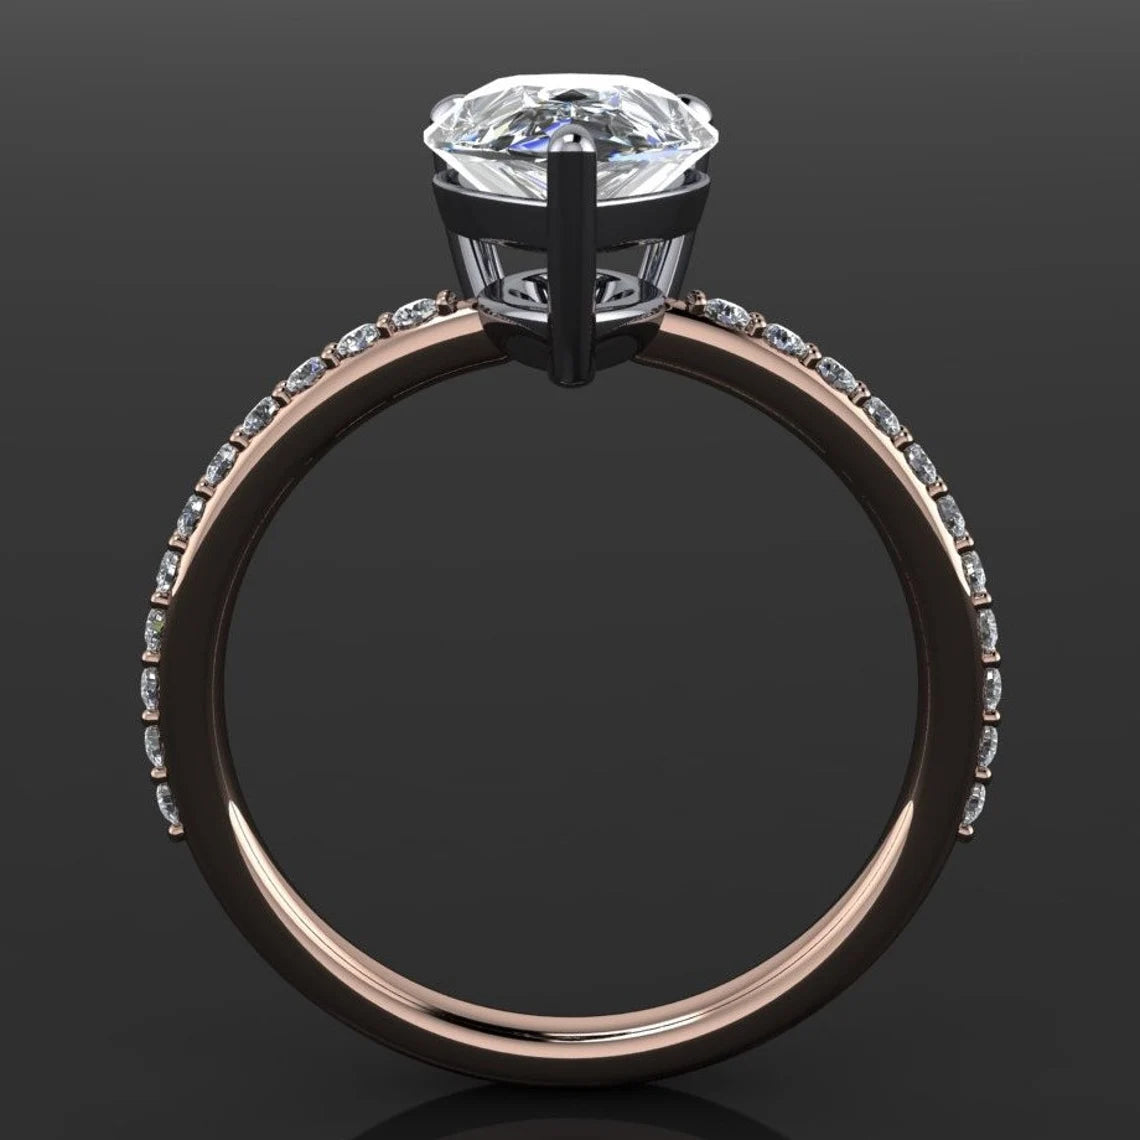 eliza ring - 2 carat pear cut NEO moissanite engagement ring, diamond pave shank - J Hollywood Designs